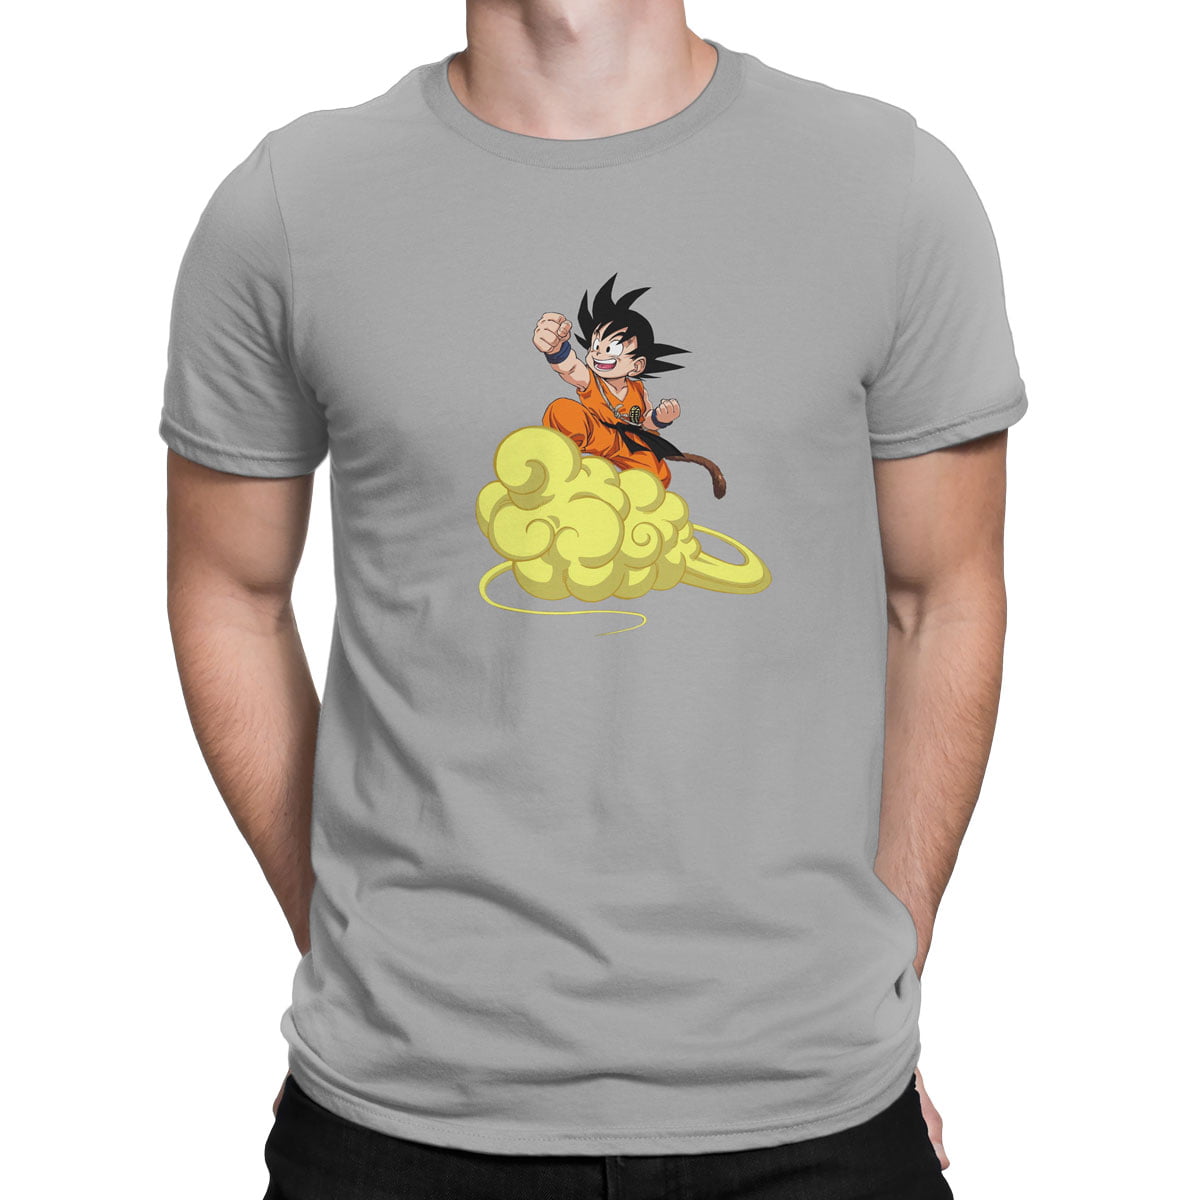 Dragonball 2 tshirt g erkek - dragon ball goku no4 baskılı erkek t-shirt - figurex